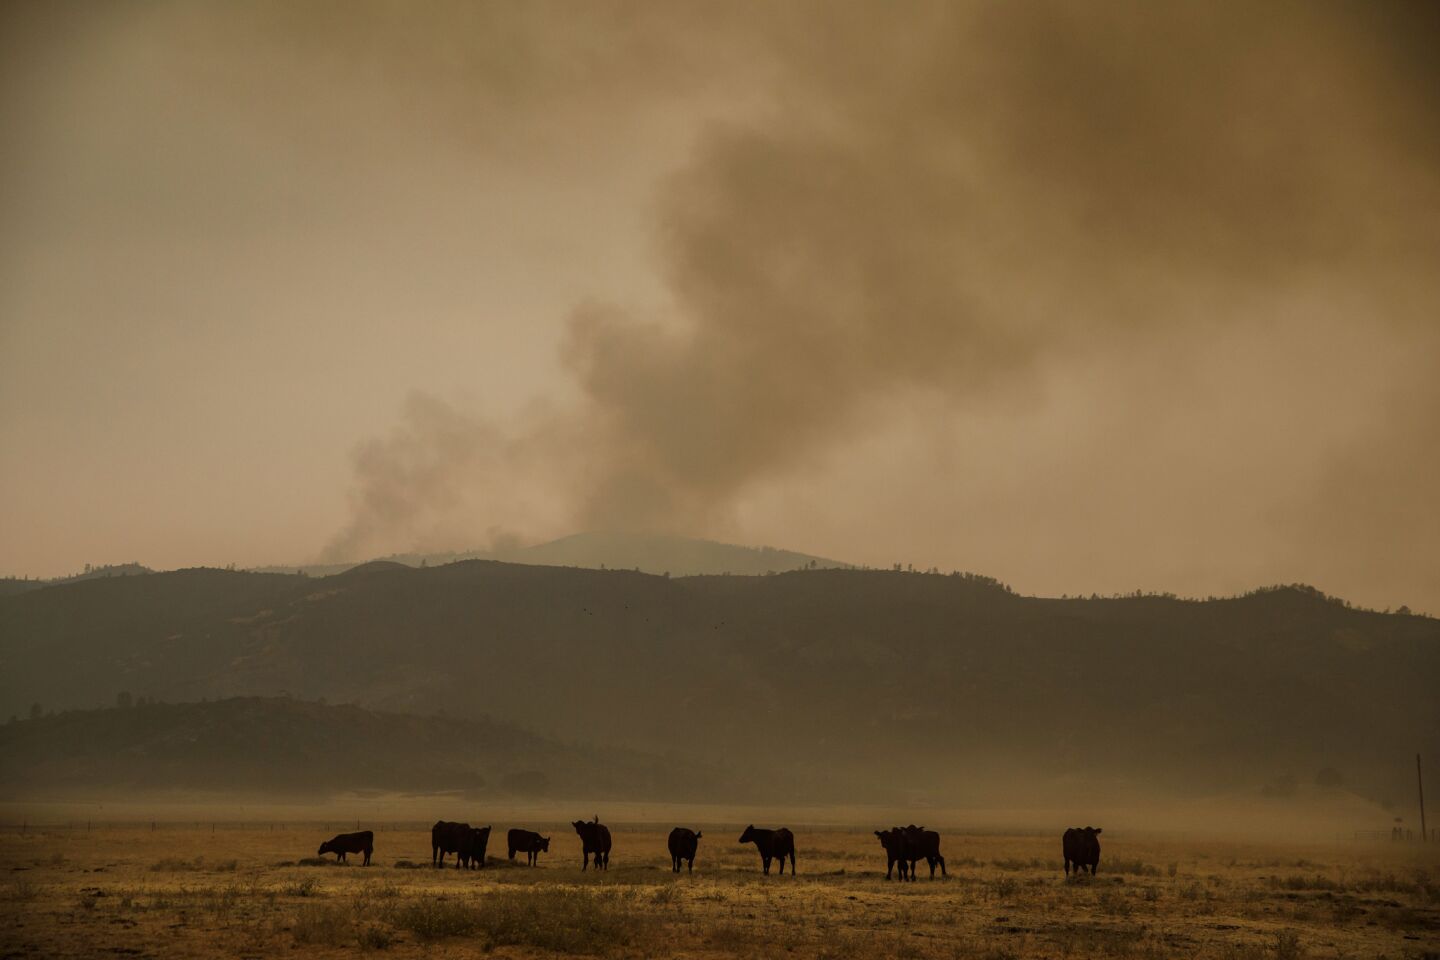 Cattle graze on the grassland near the Ranch fire outside of Lodoga.